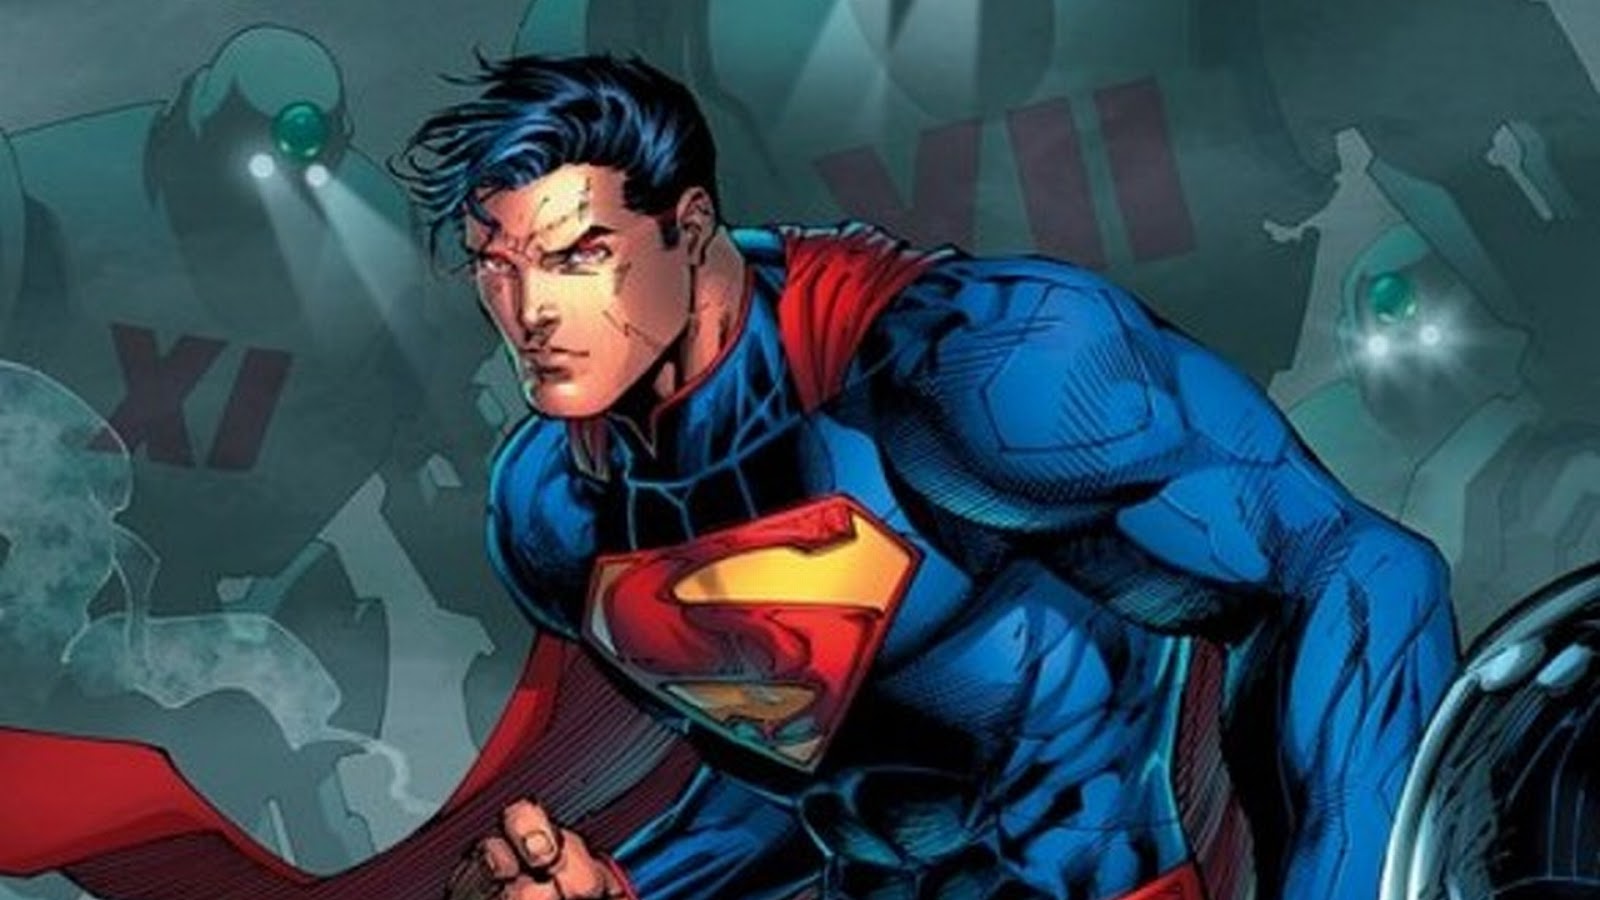 superman comic wallpaper,superman,superhero,fictional character,fiction,hero